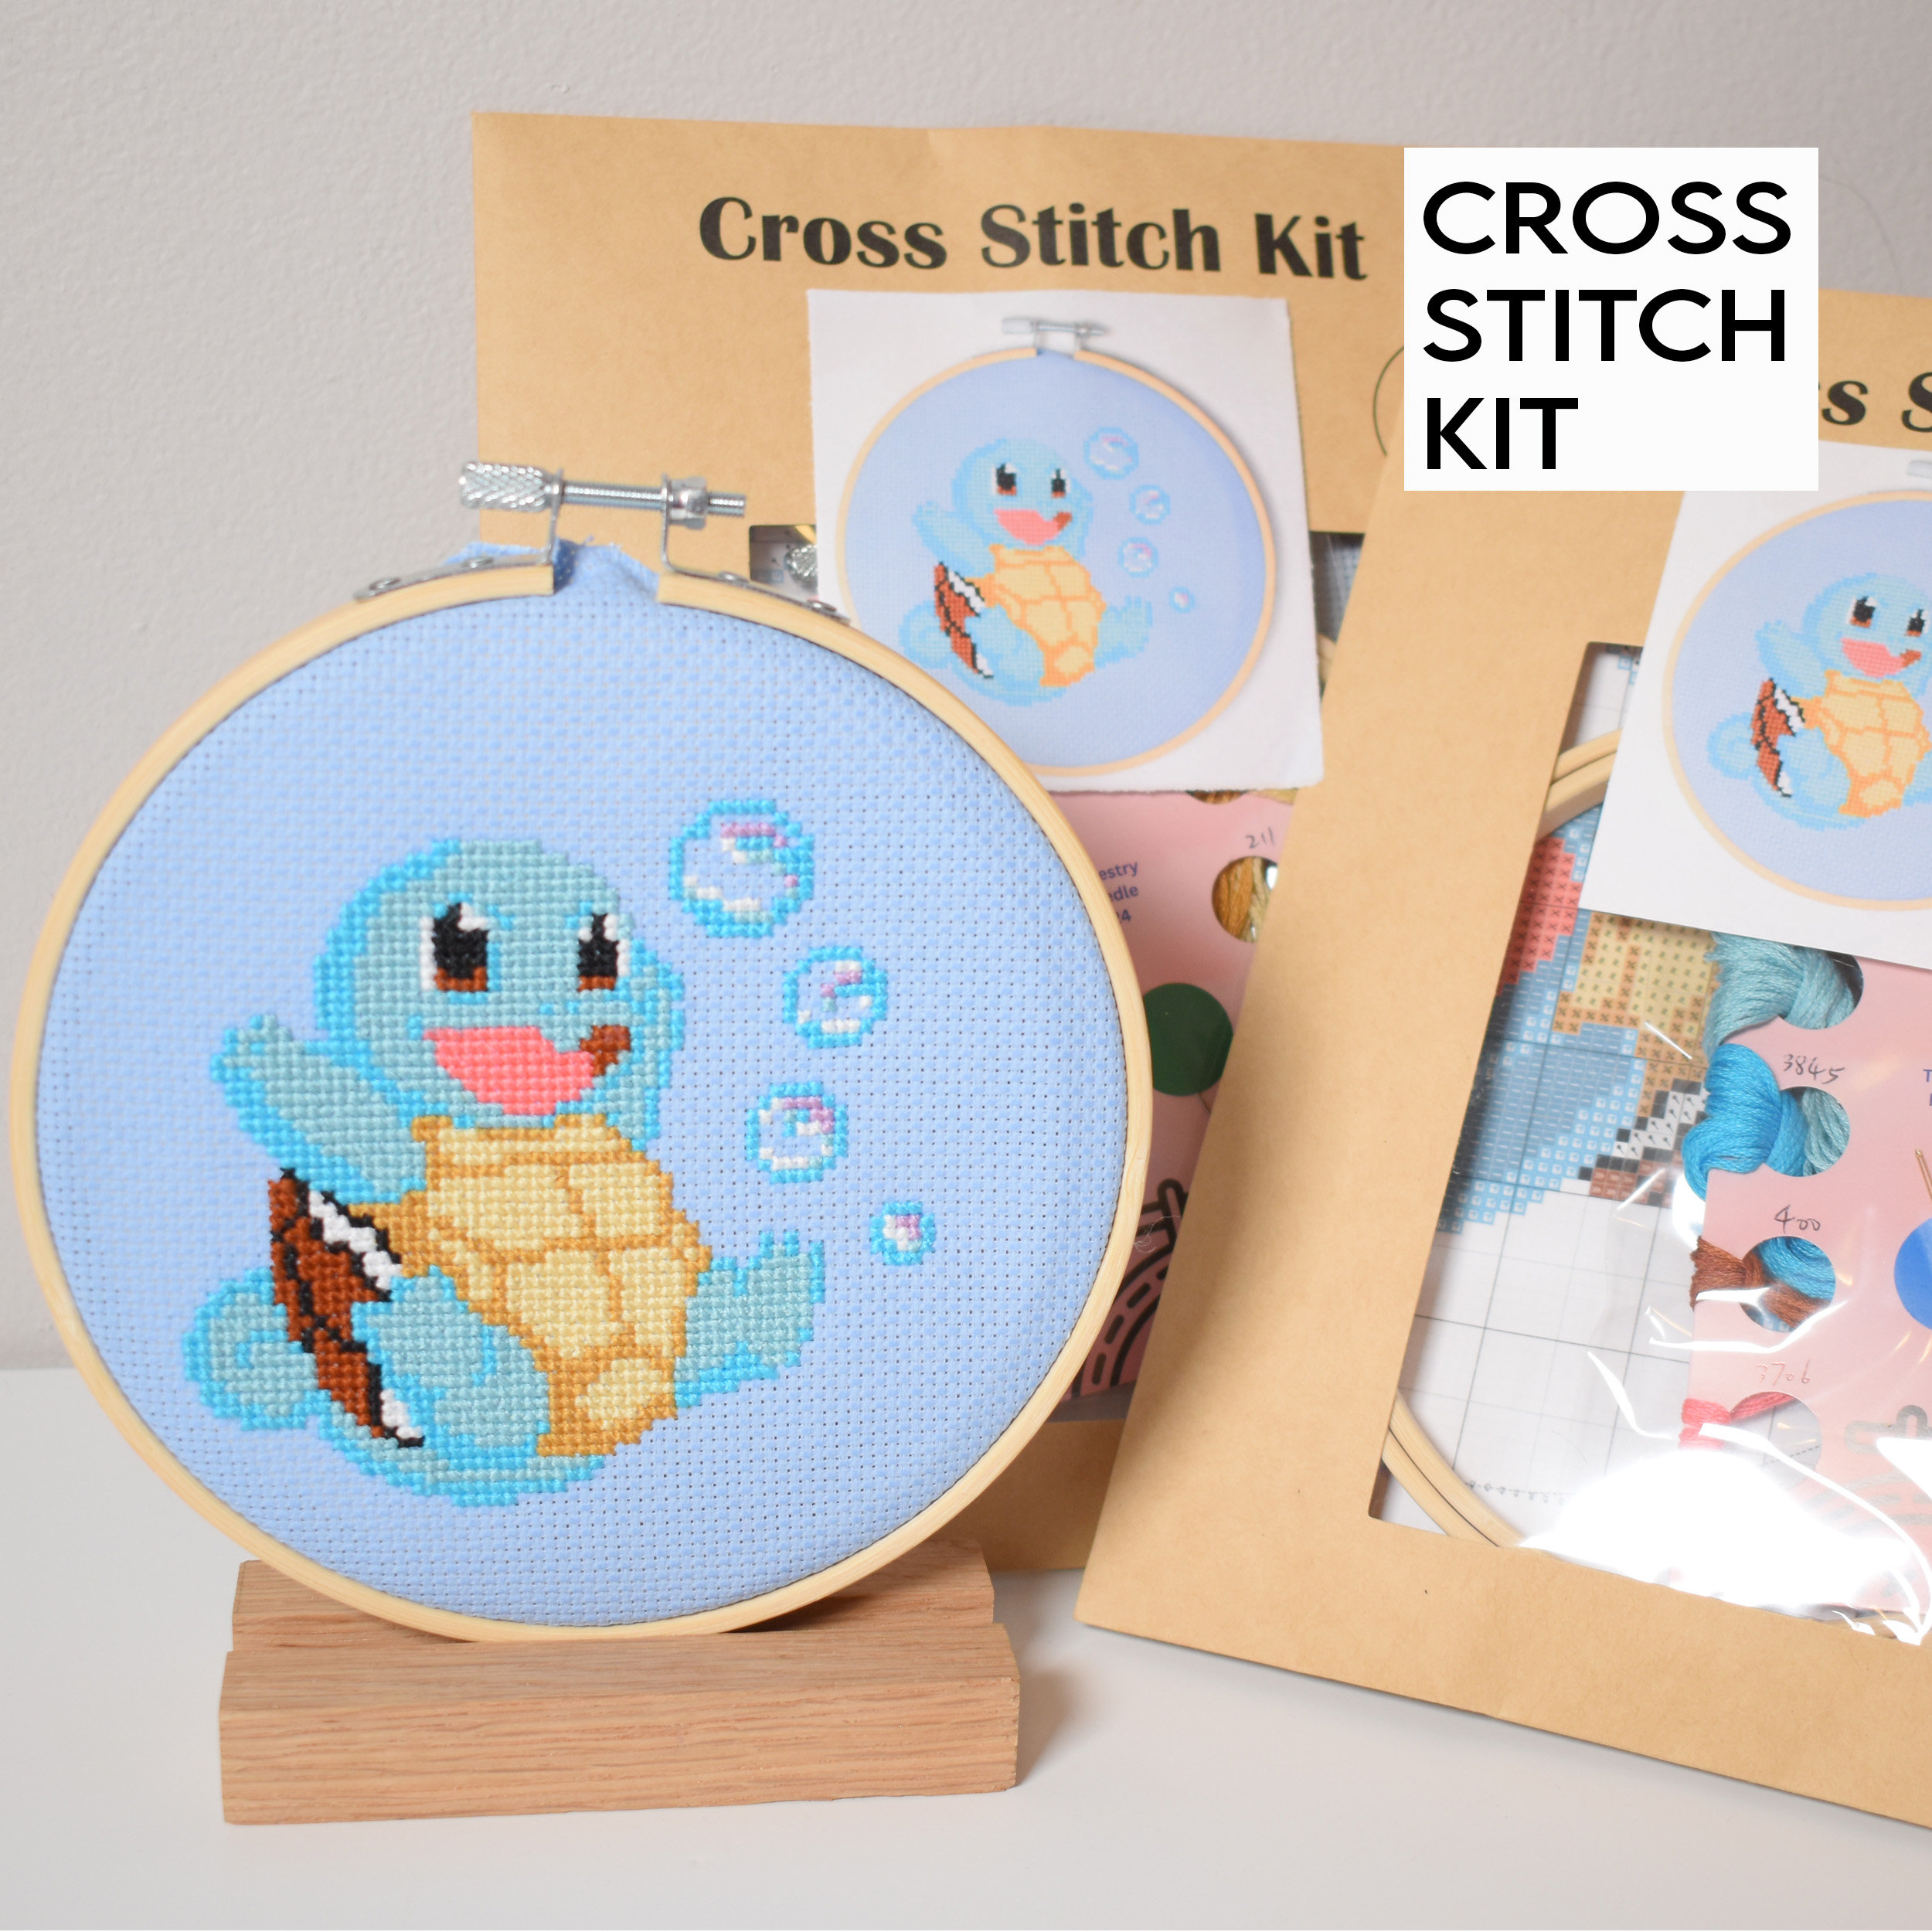 Cross Stitch Kit Beginner, Easy Diy Cross Stitch Kits, Modern